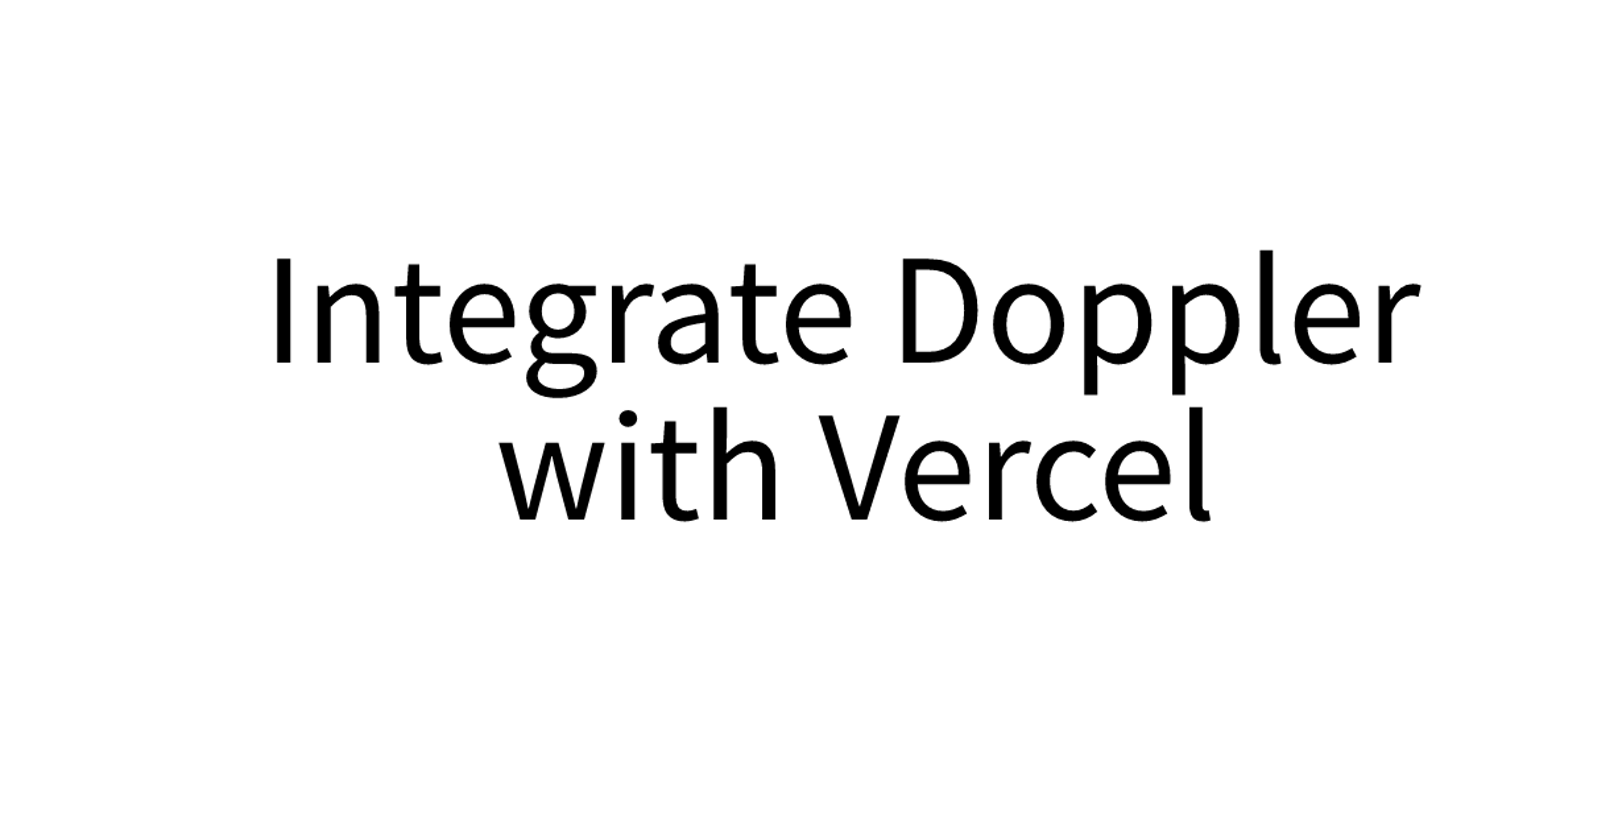 Integrating Vercel with Doppler: Sync Secrets in Production